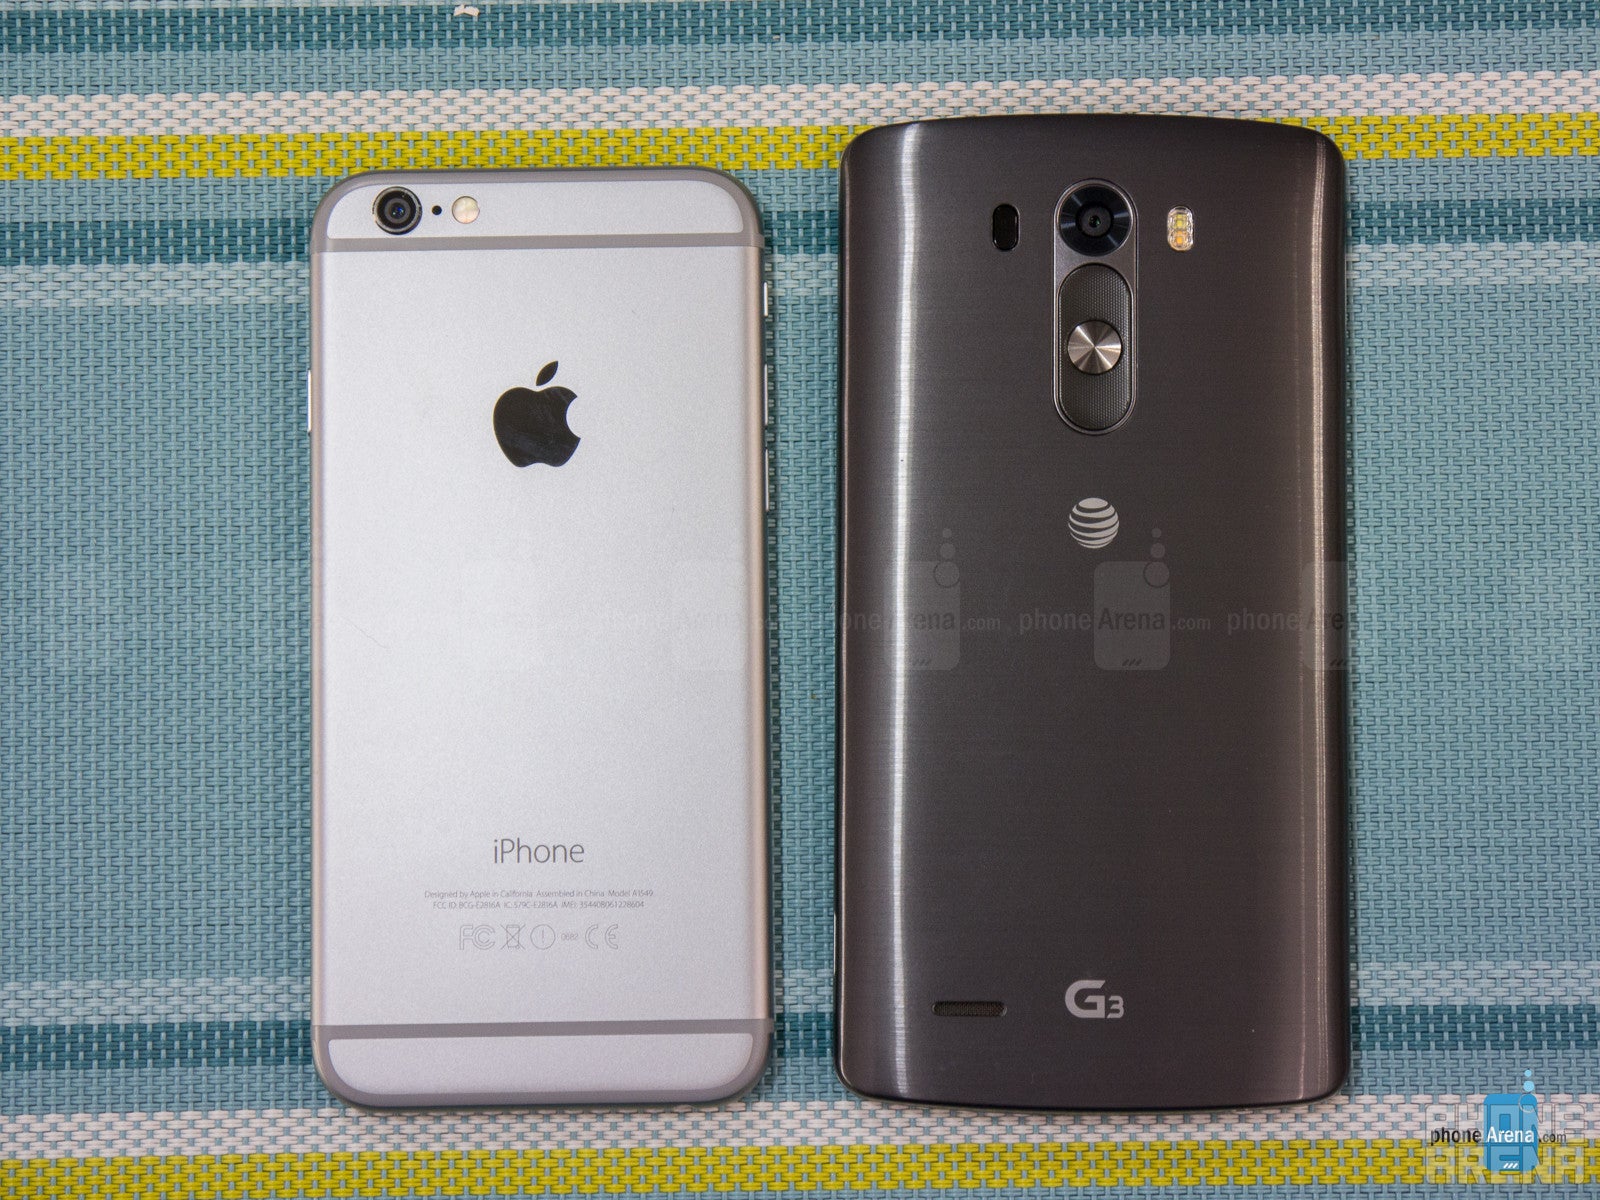 Apple iPhone 6 vs LG G3